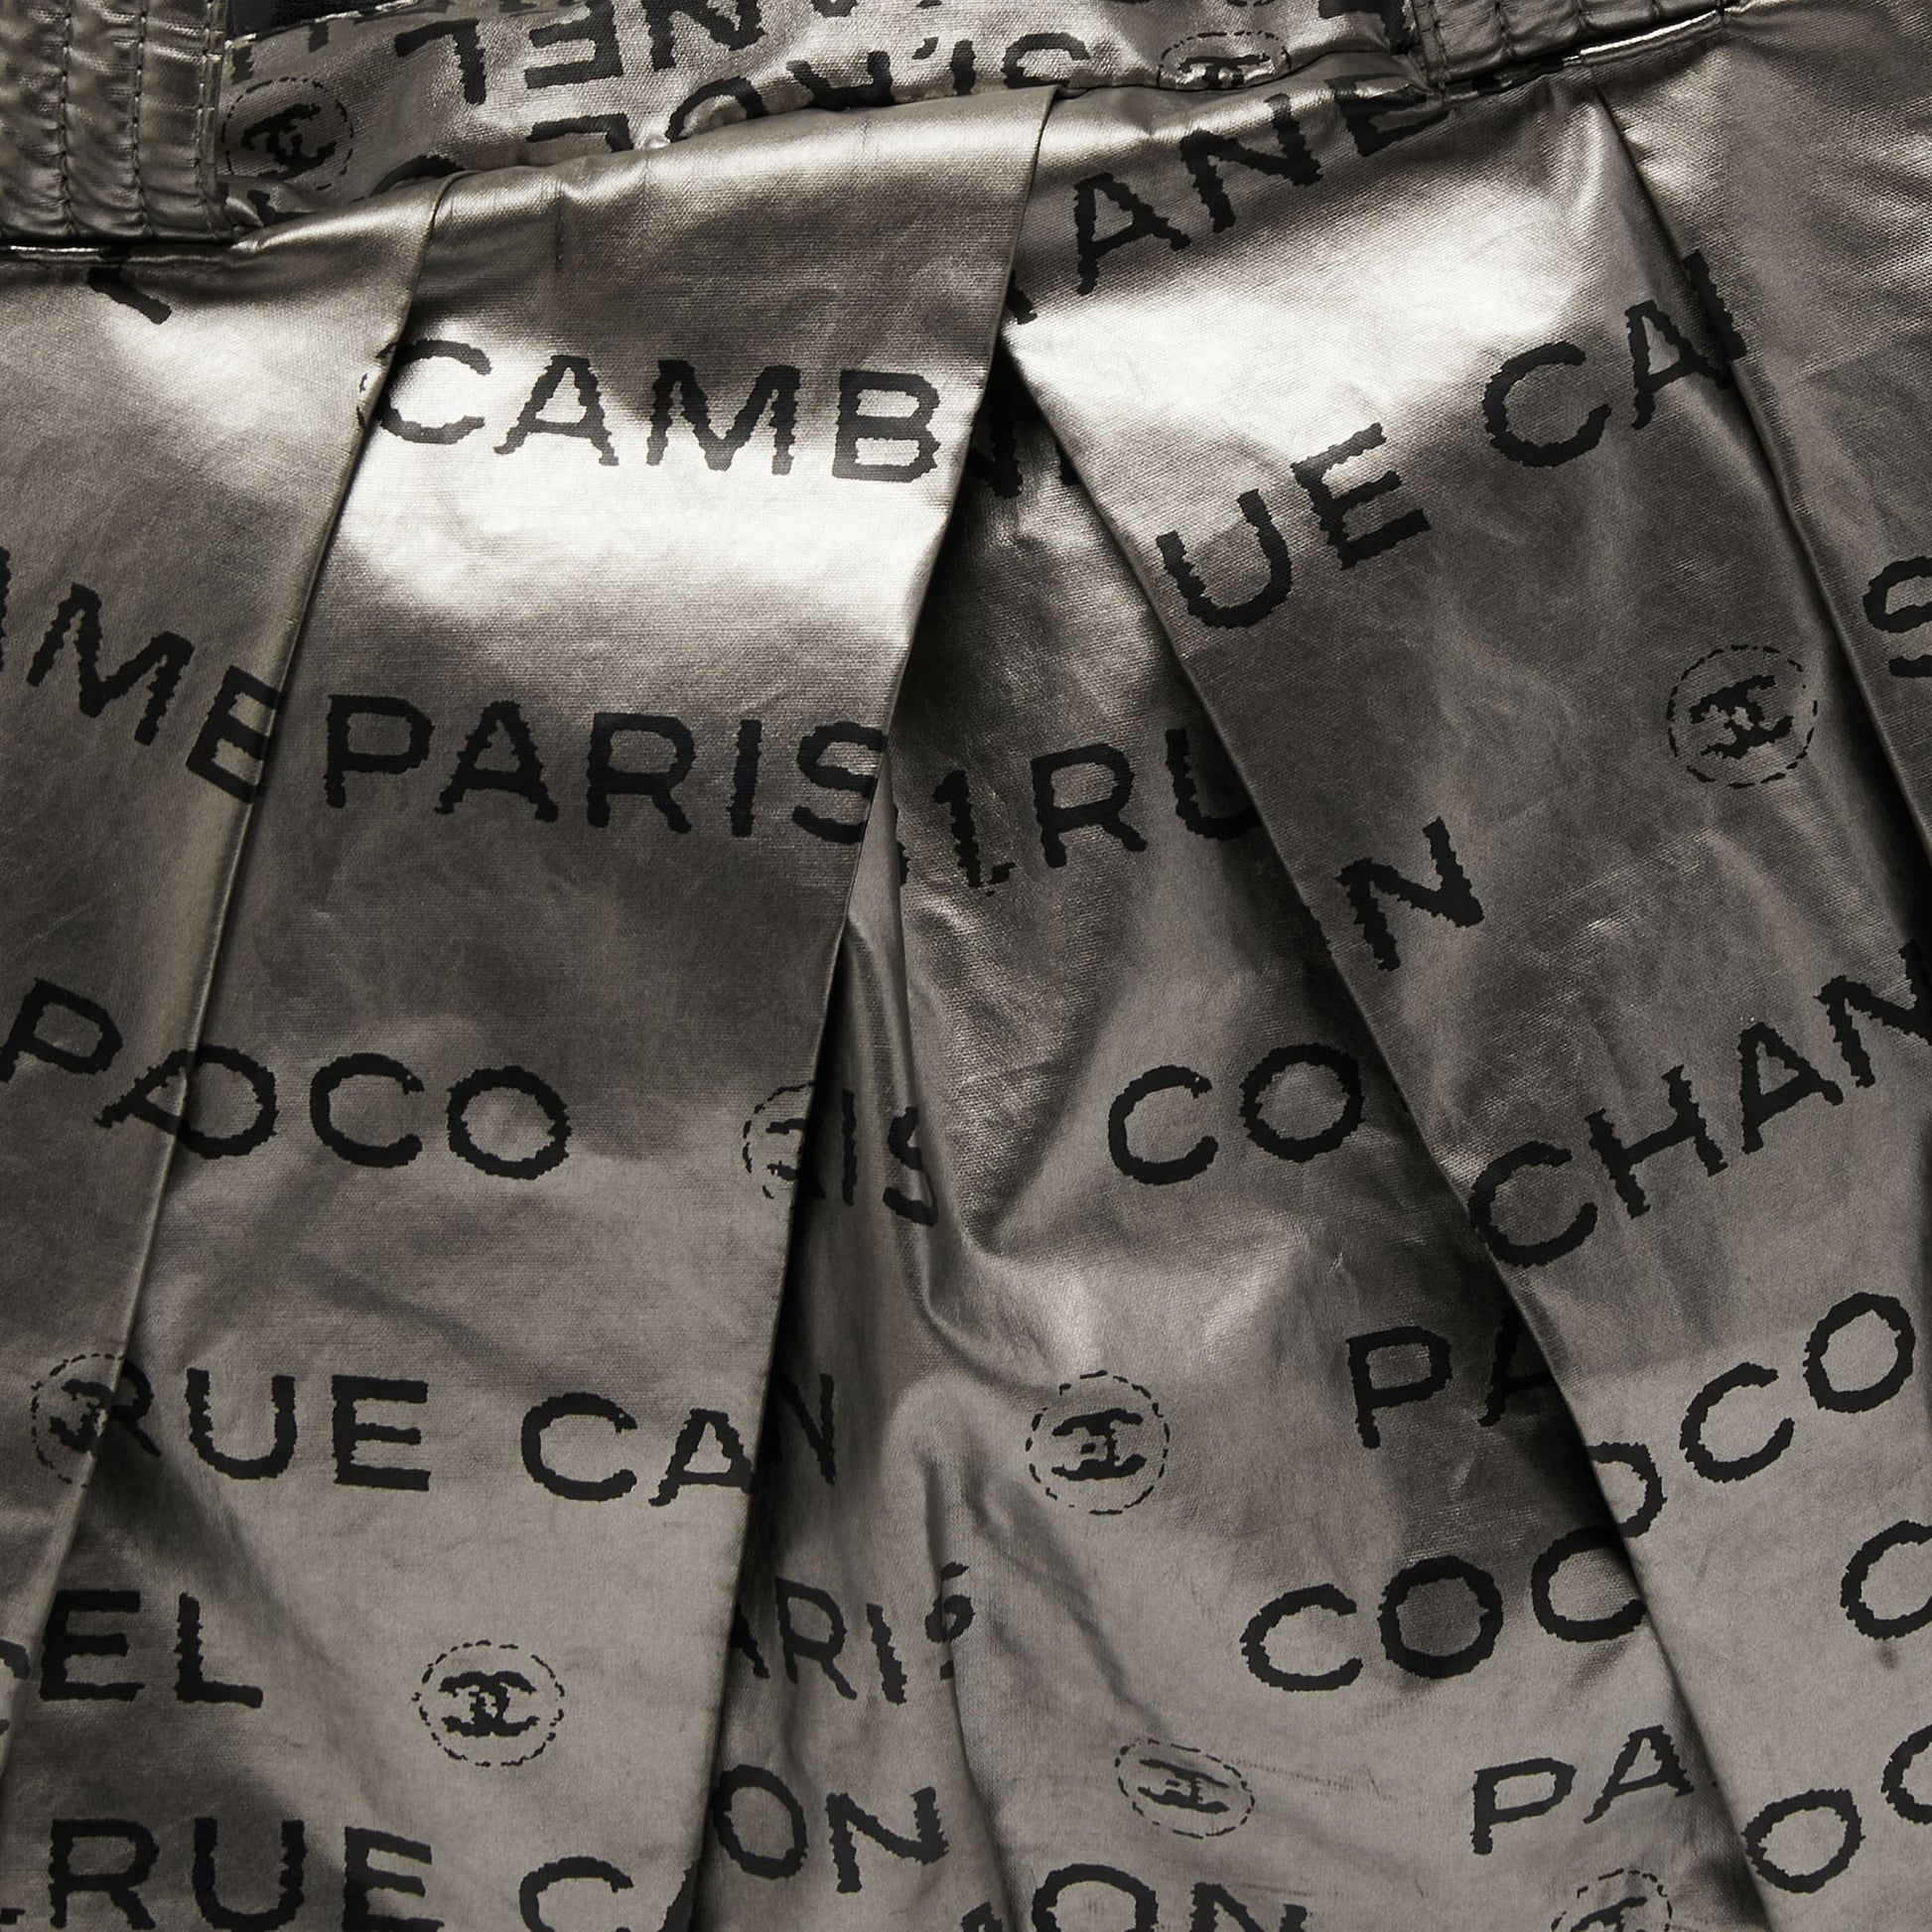 Vintage Chanel Silver Nylon Unlimited 31 Rue Cambon Shoulder Bag